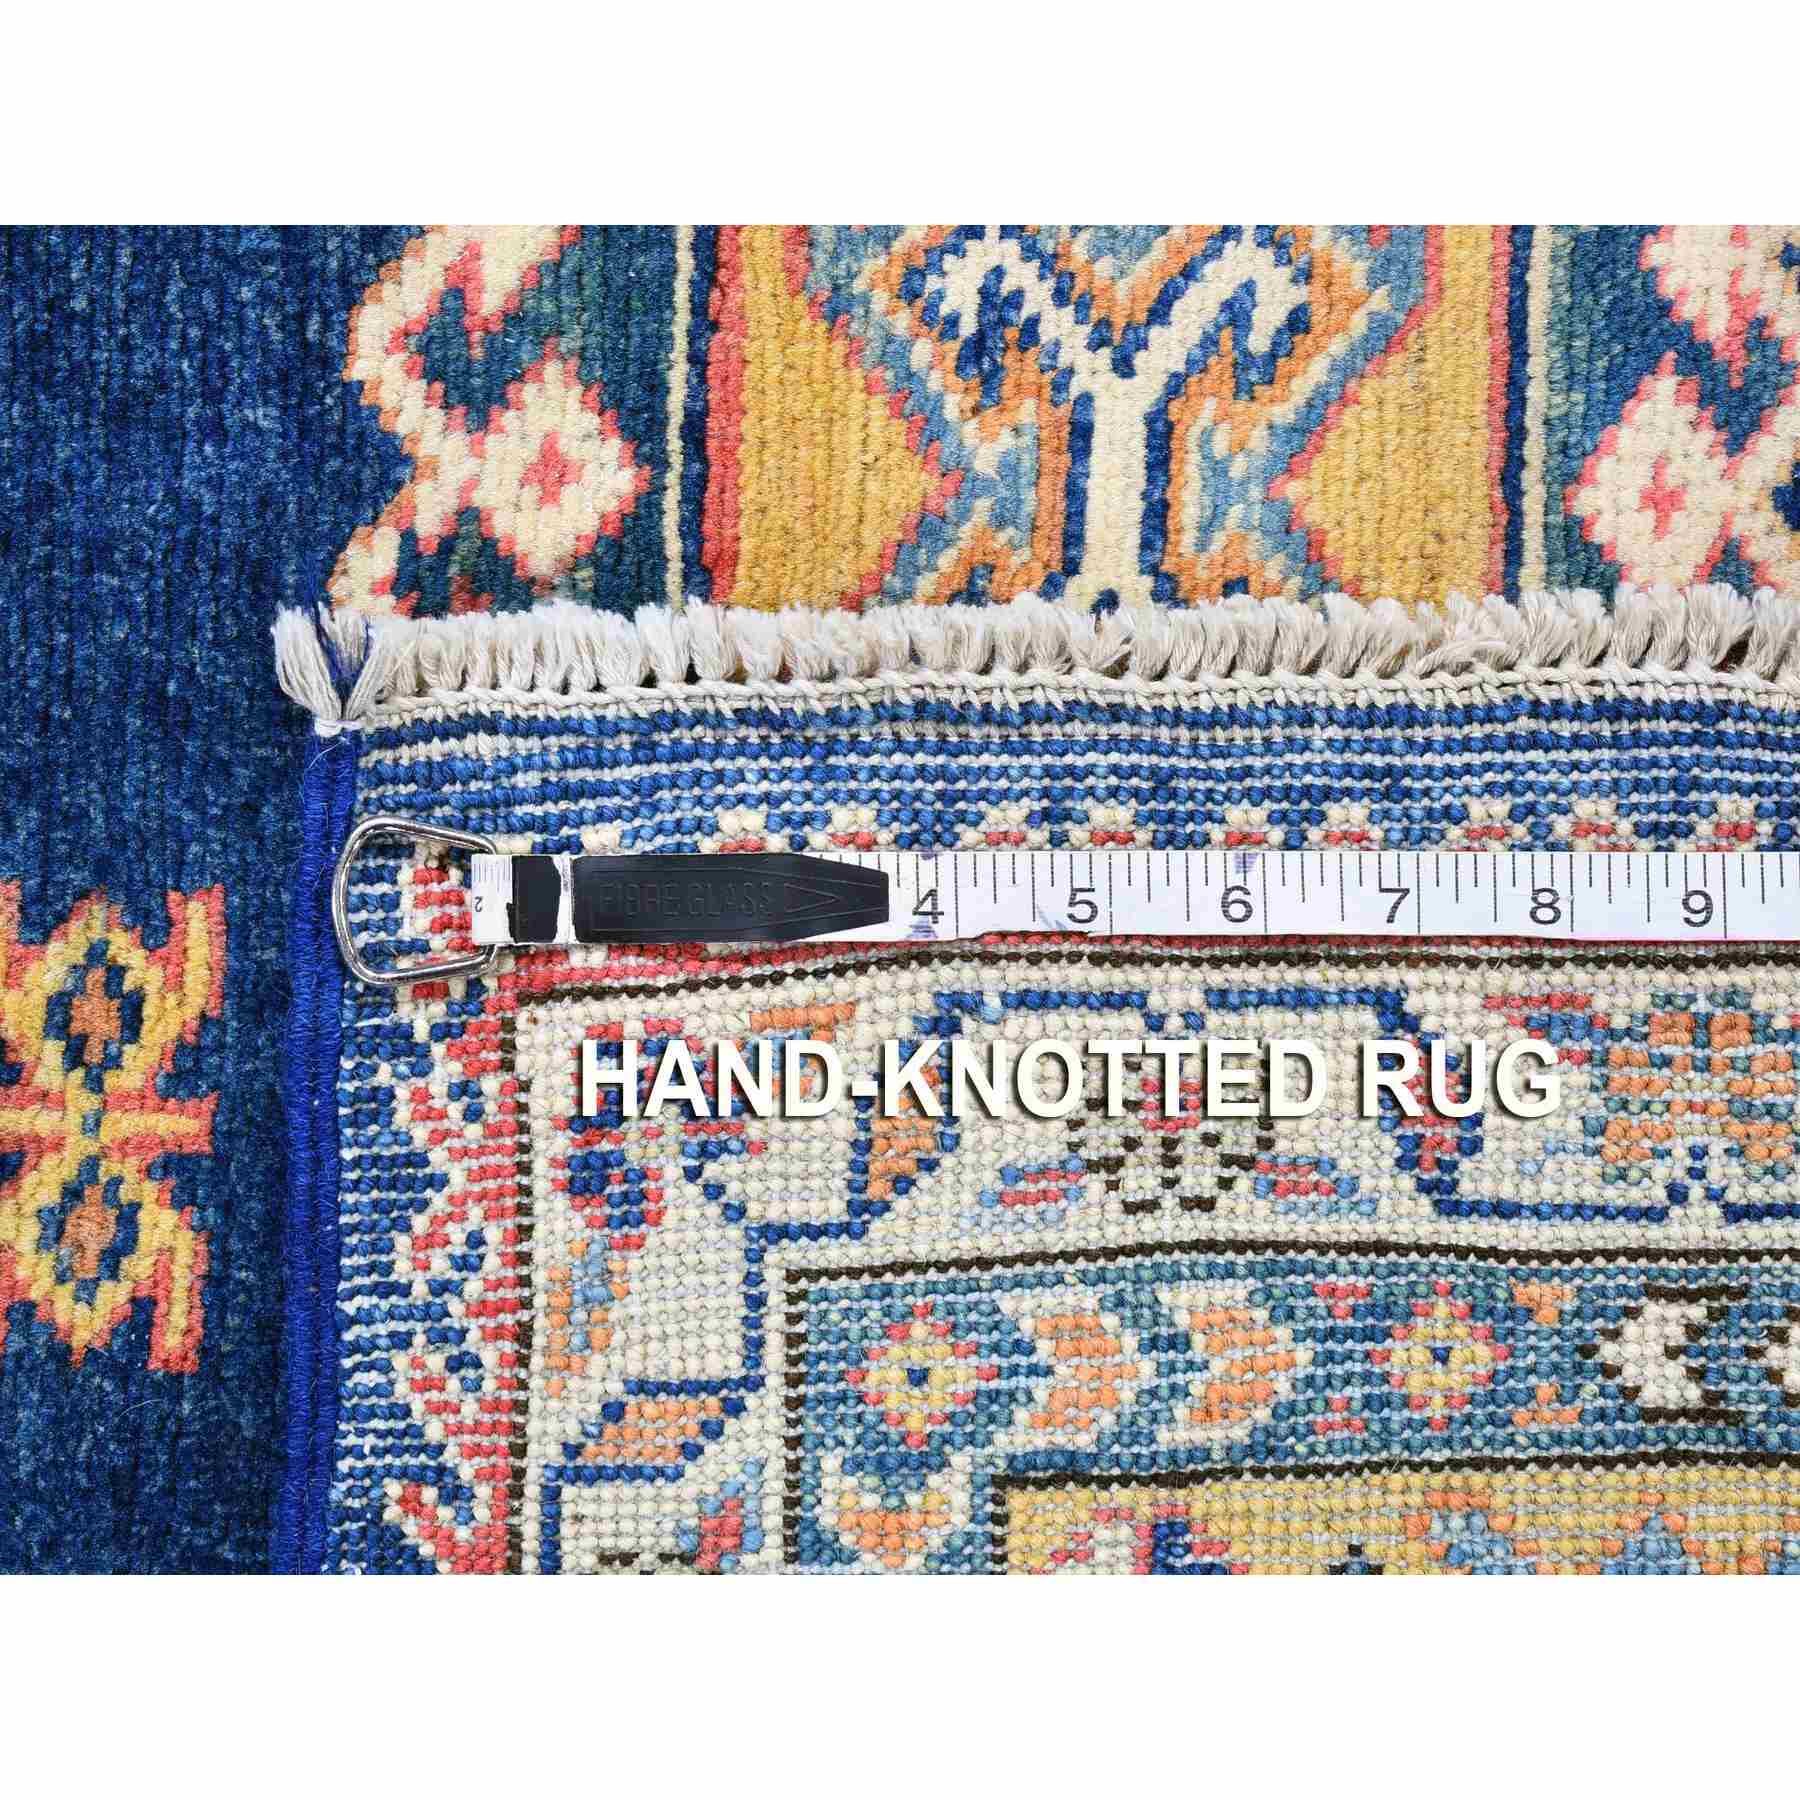 Kazak-Hand-Knotted-Rug-331410